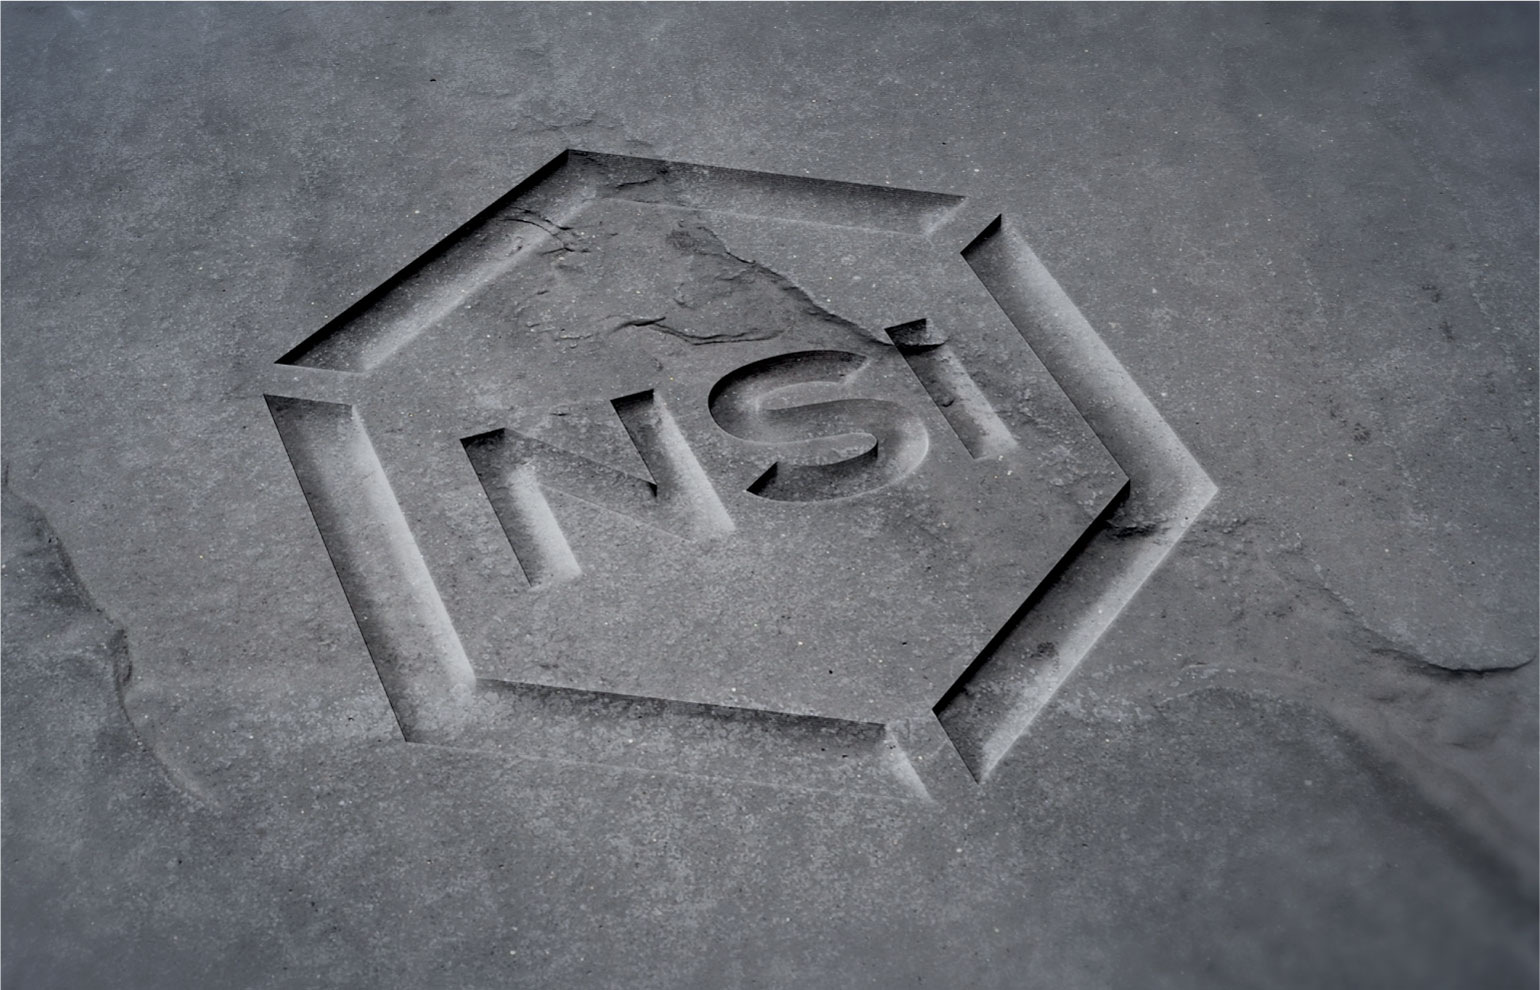 NSI logo carved into stone